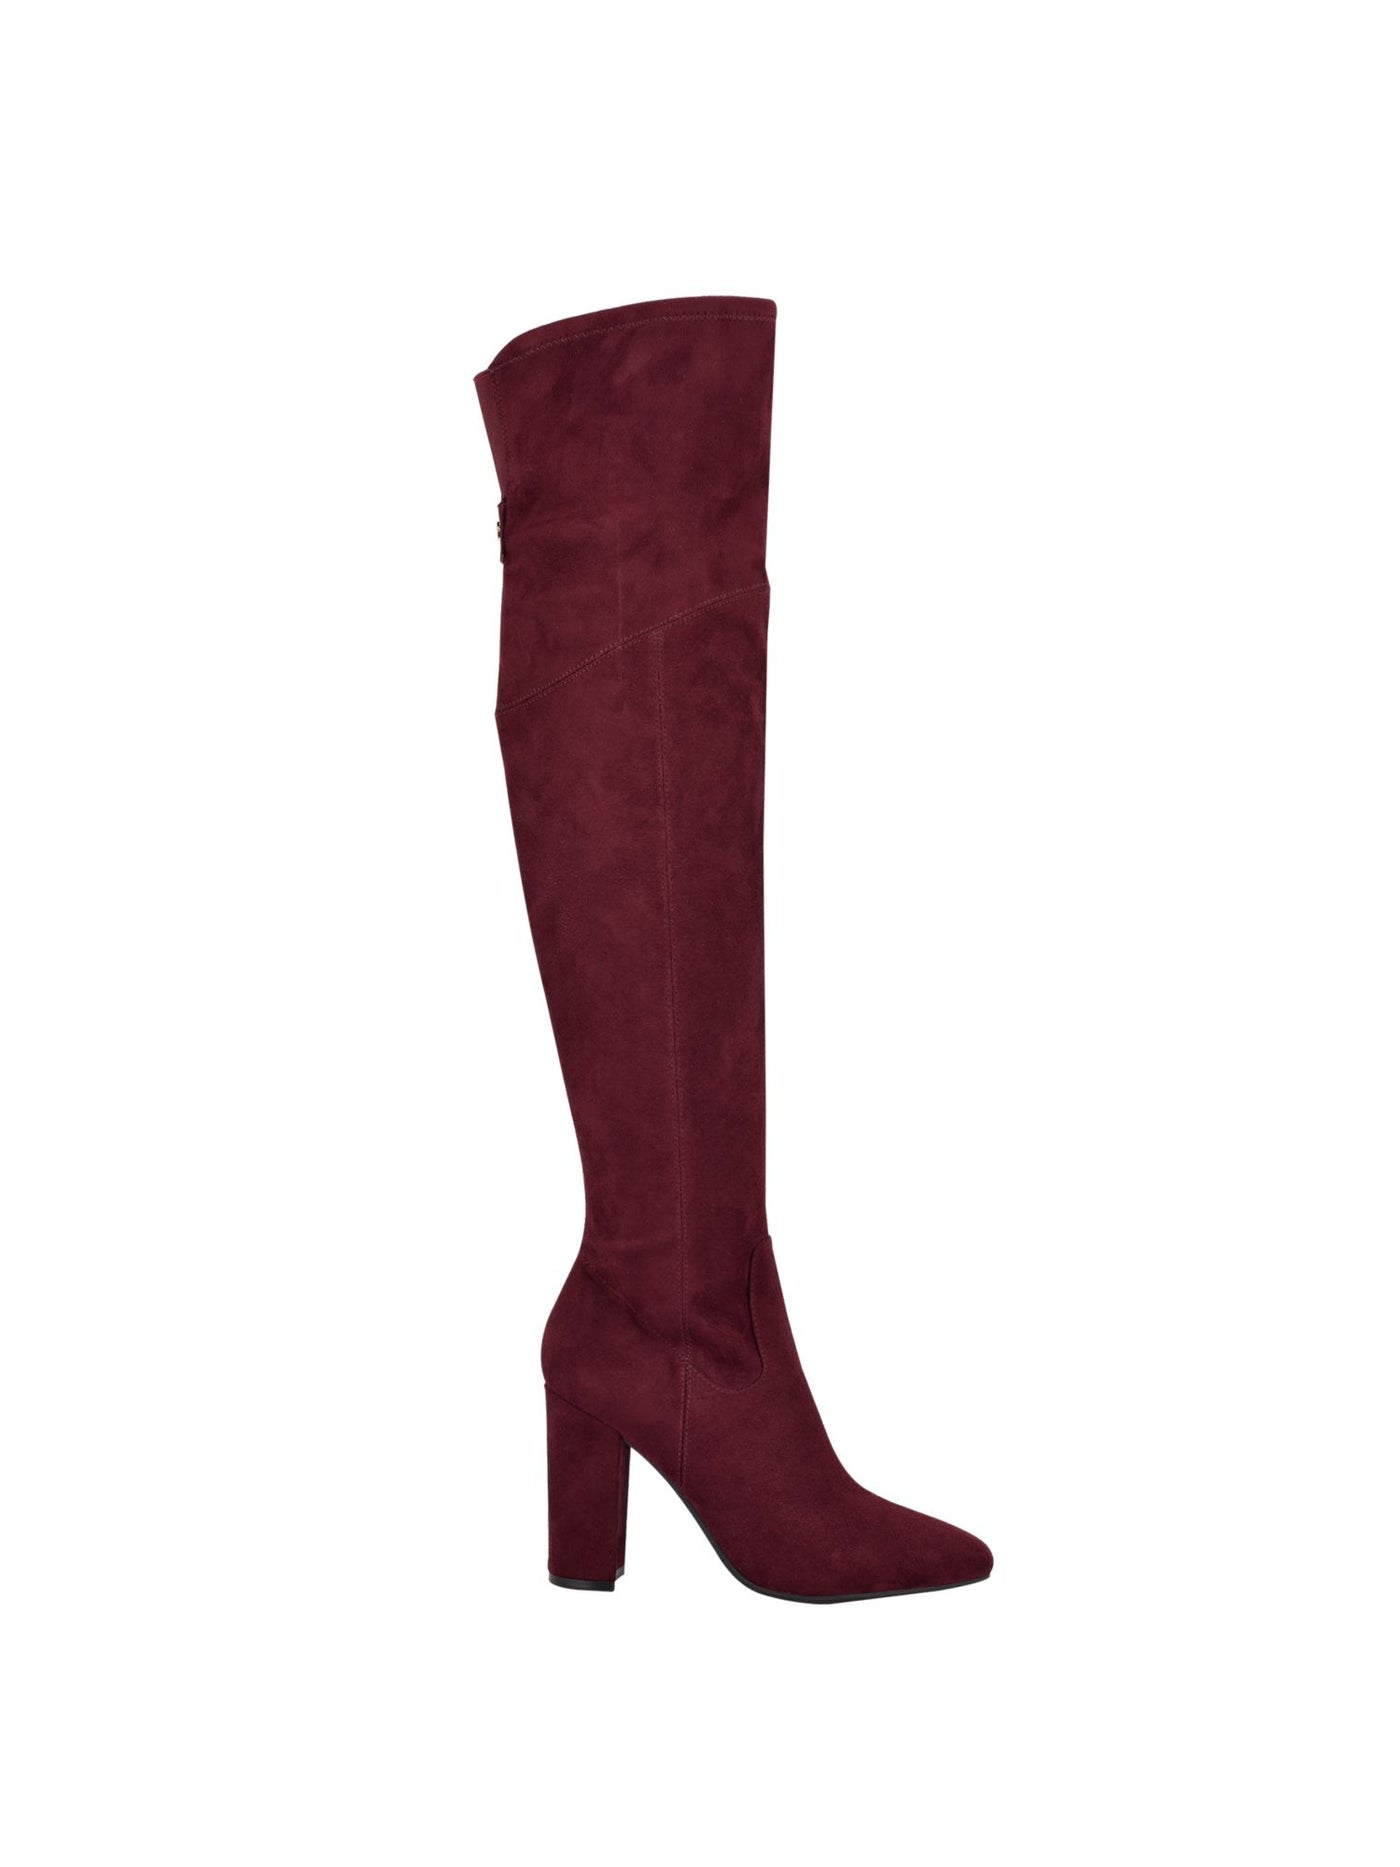 GUESS Womens Burgundy Gore Stretch Logo Mireya Square Toe Block Heel Zip-Up Dress Boots 6.5 M